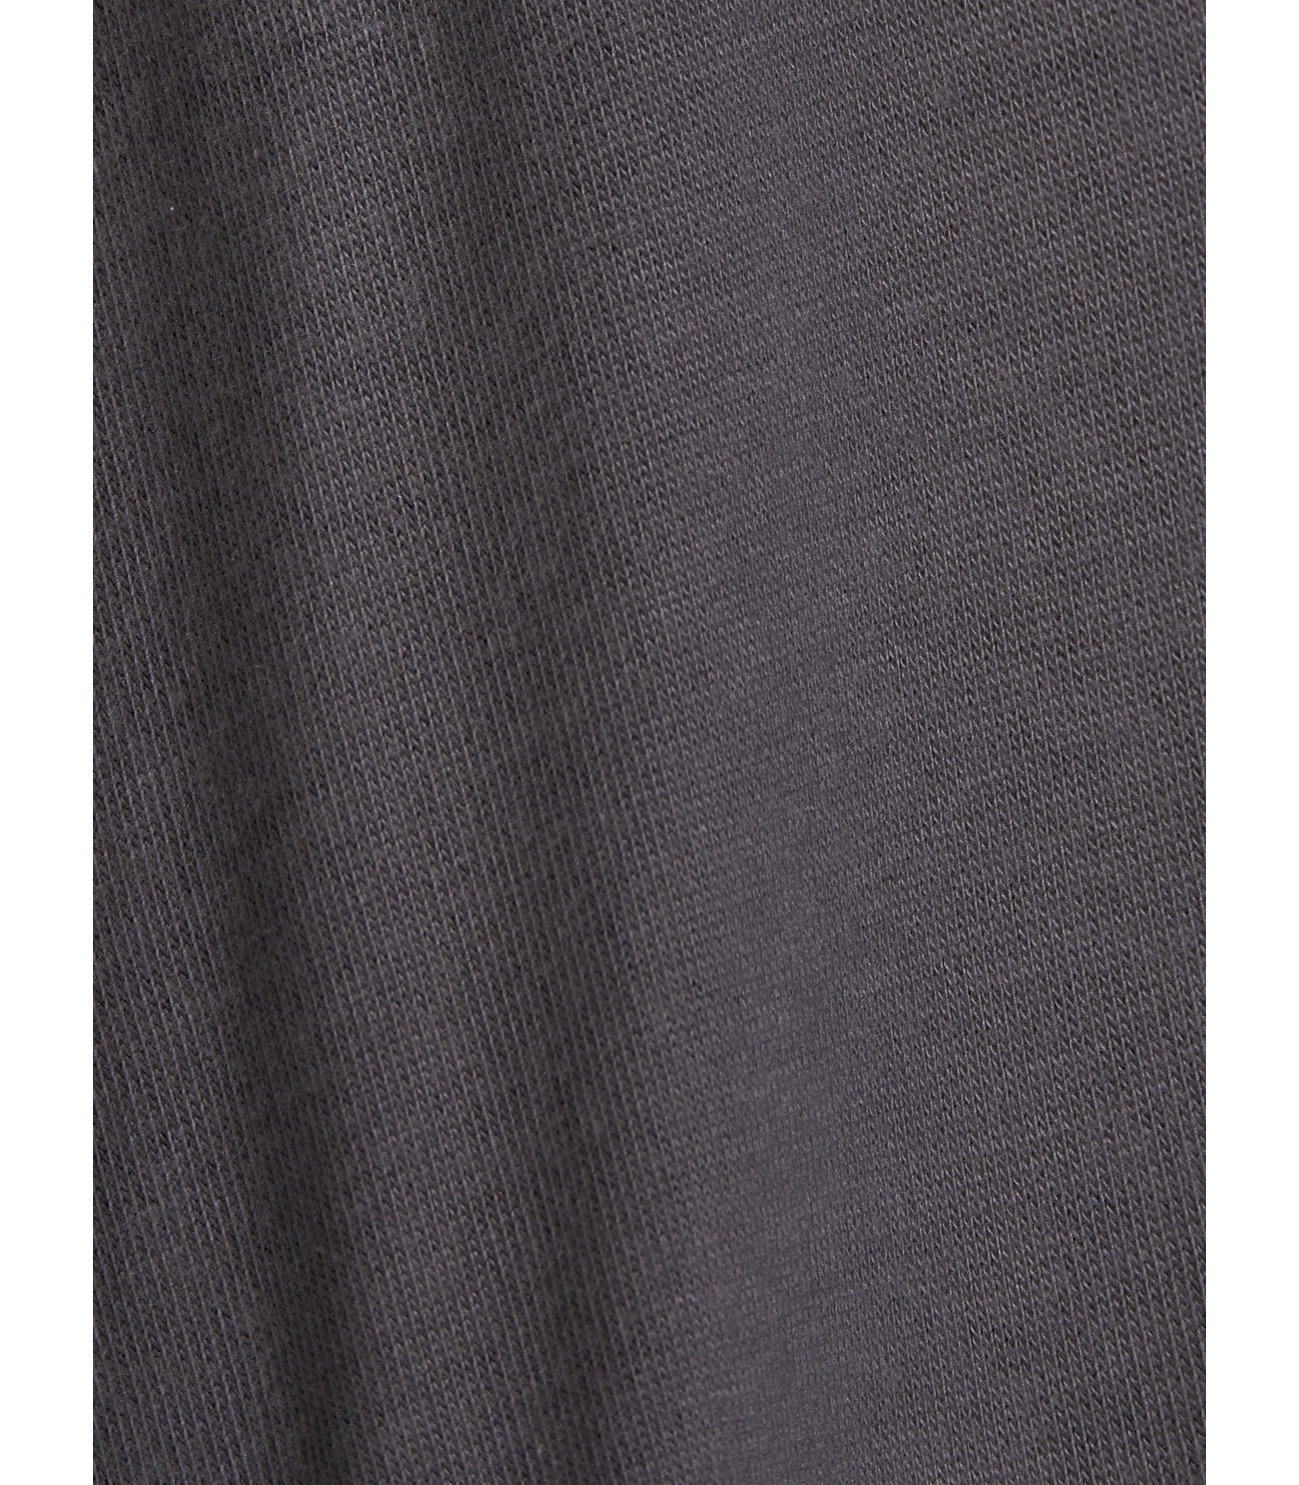 【Naoko Okusa x three dots】Brushed sweater volume sleeve 2way cardy 詳細画像 shark grey 5